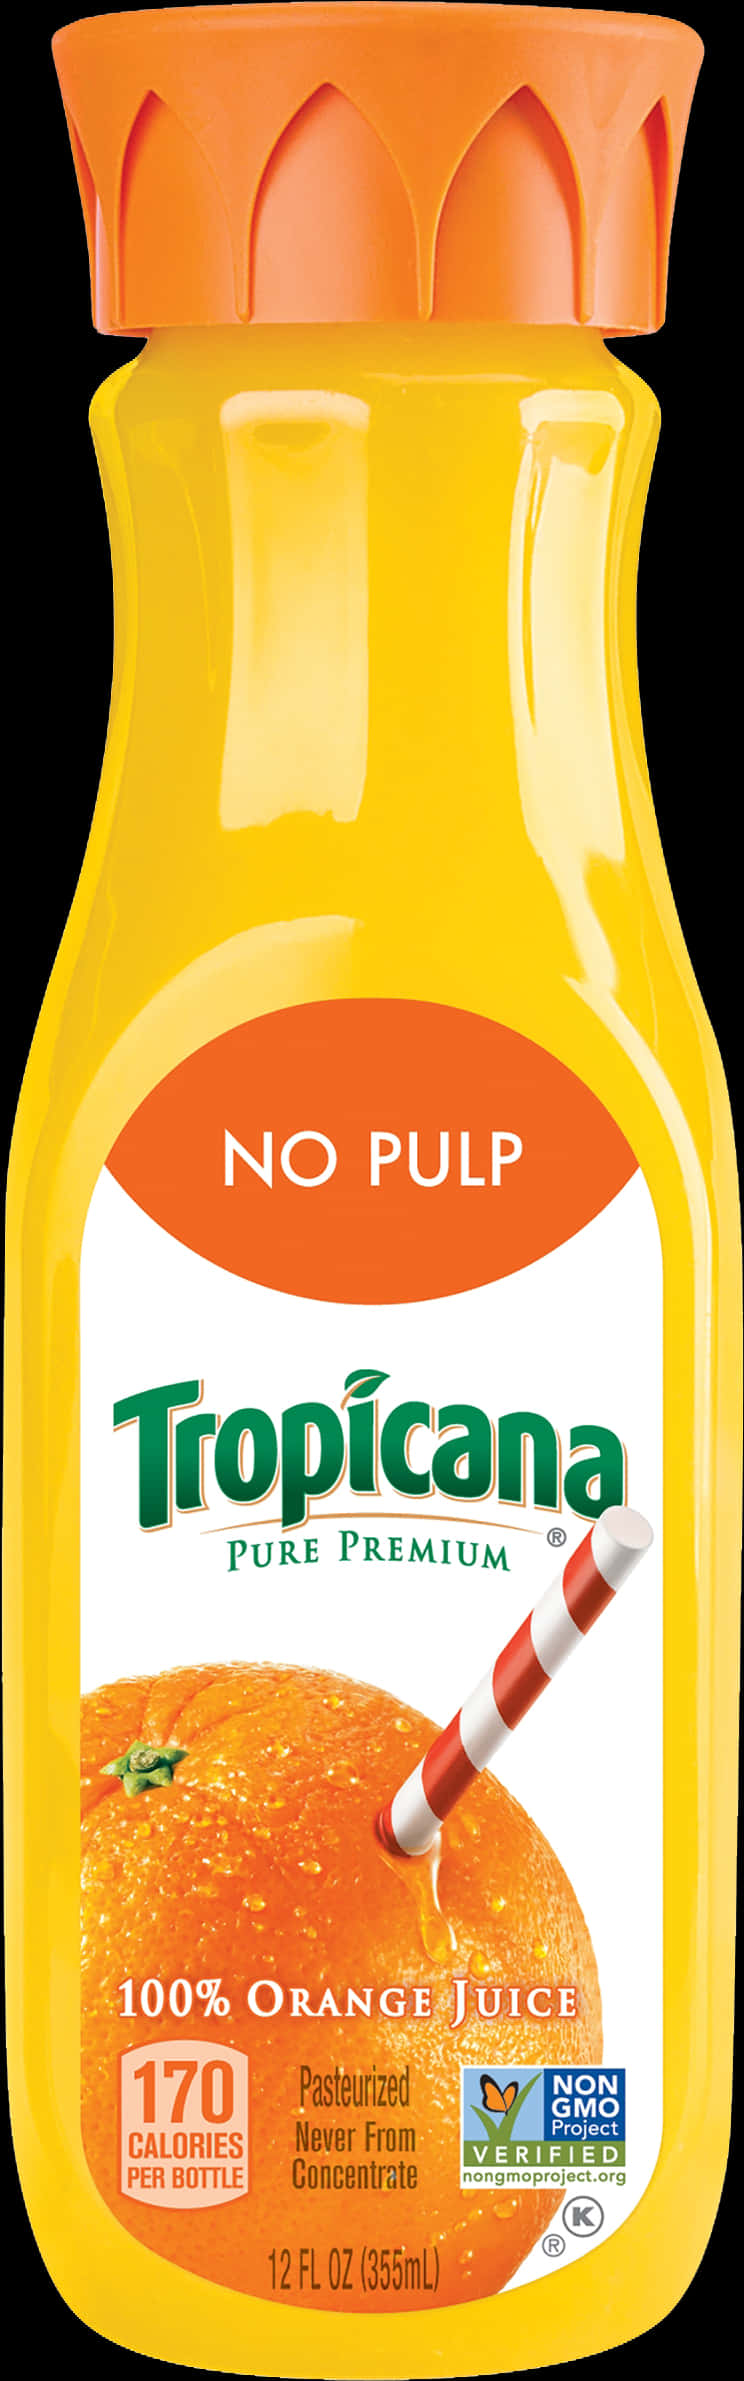 Tropicana No Pulp Orange Juice Bottle PNG image